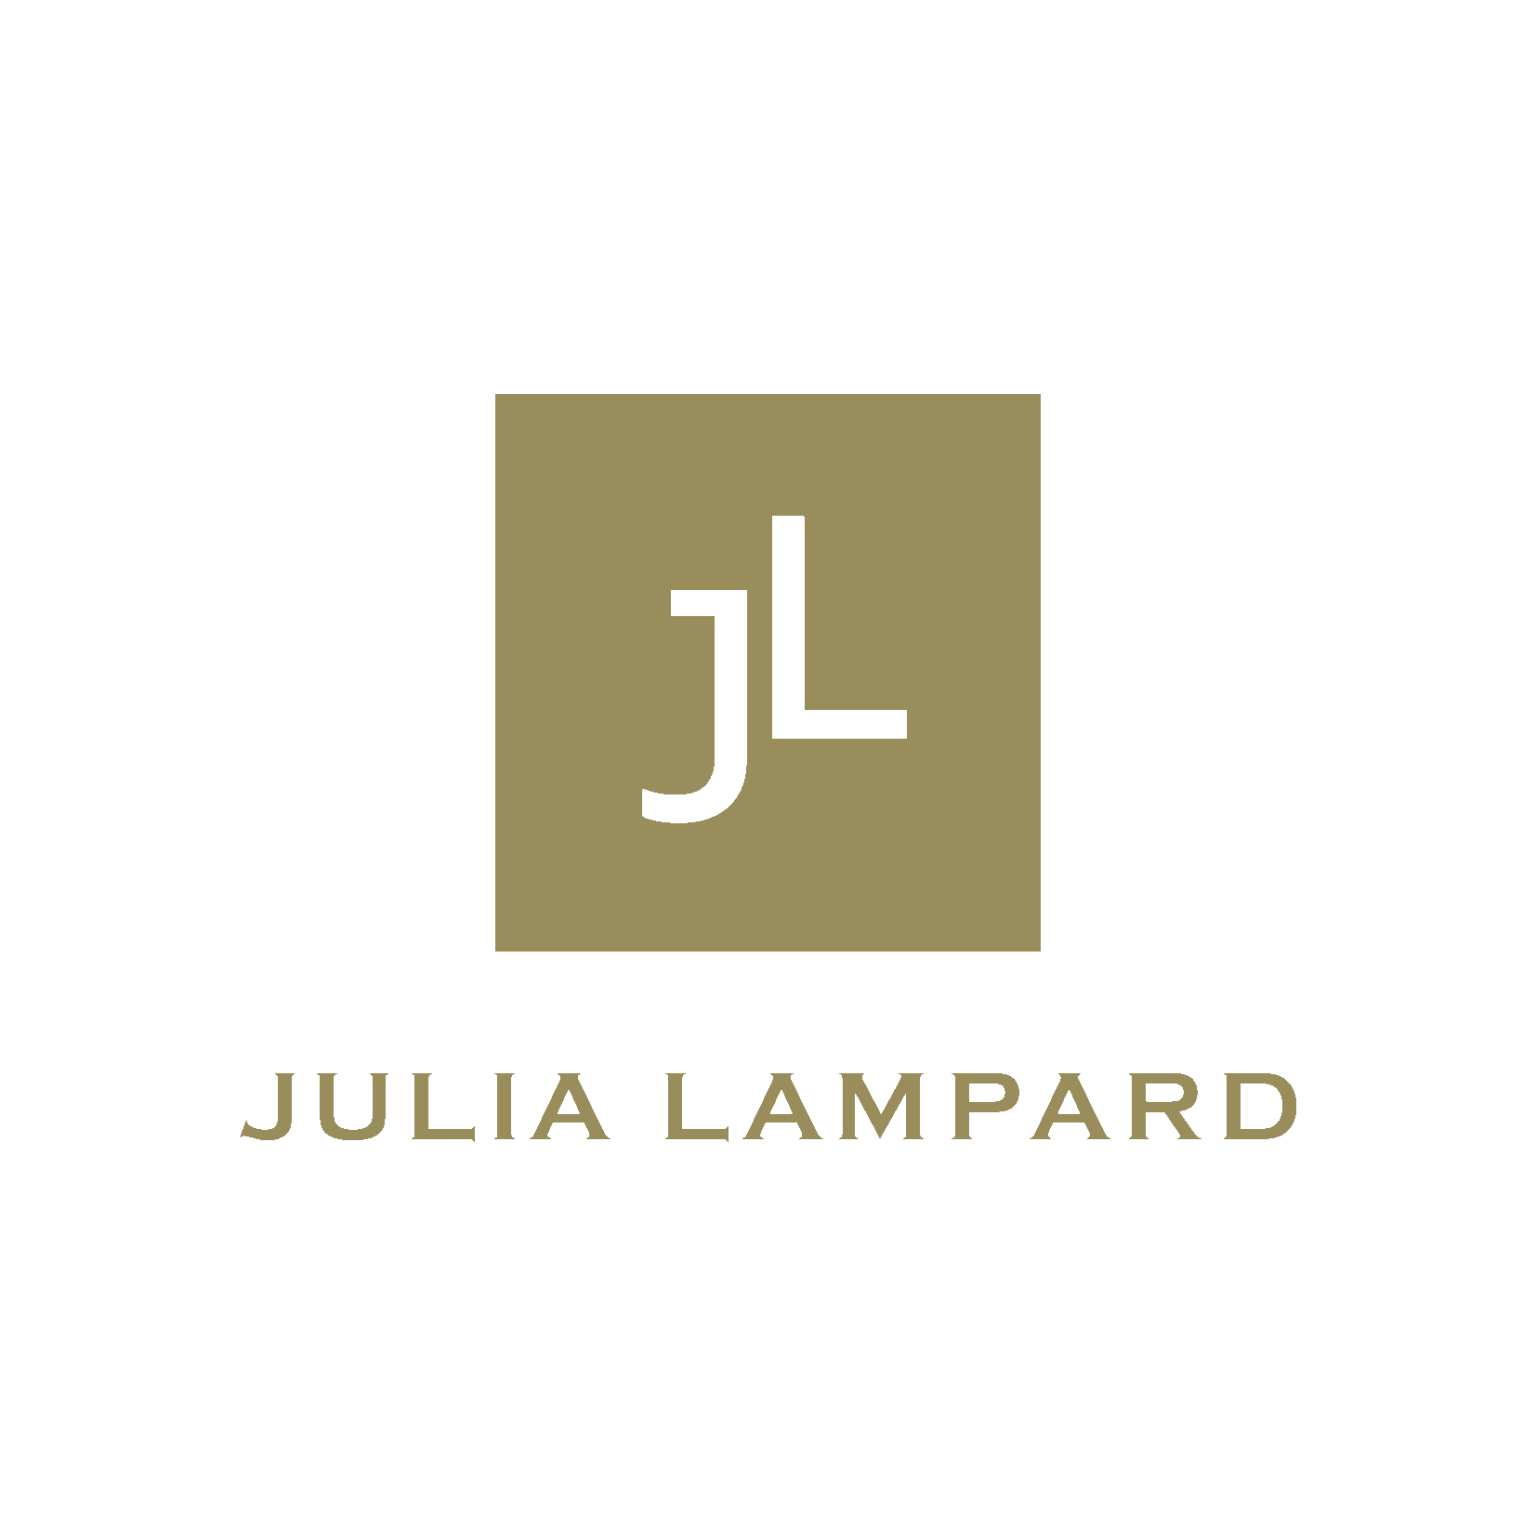 Julia Lampard logo gold